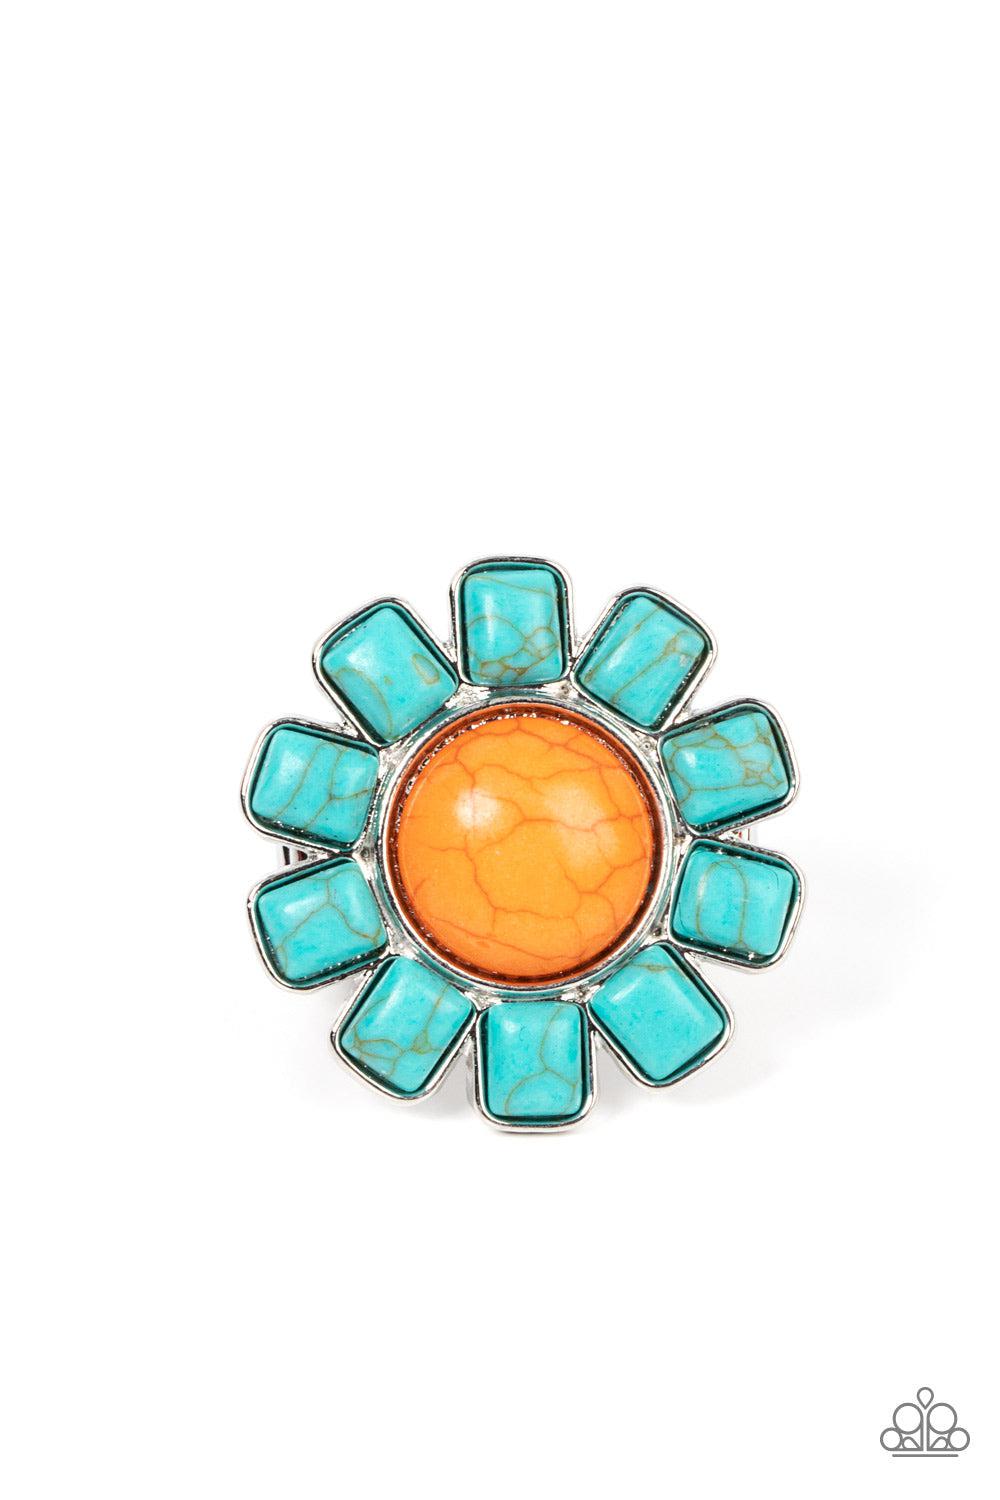 Mojave Marigold Orange &amp; Turquoise Blue Stone Ring - Paparazzi Accessories- lightbox - CarasShop.com - $5 Jewelry by Cara Jewels